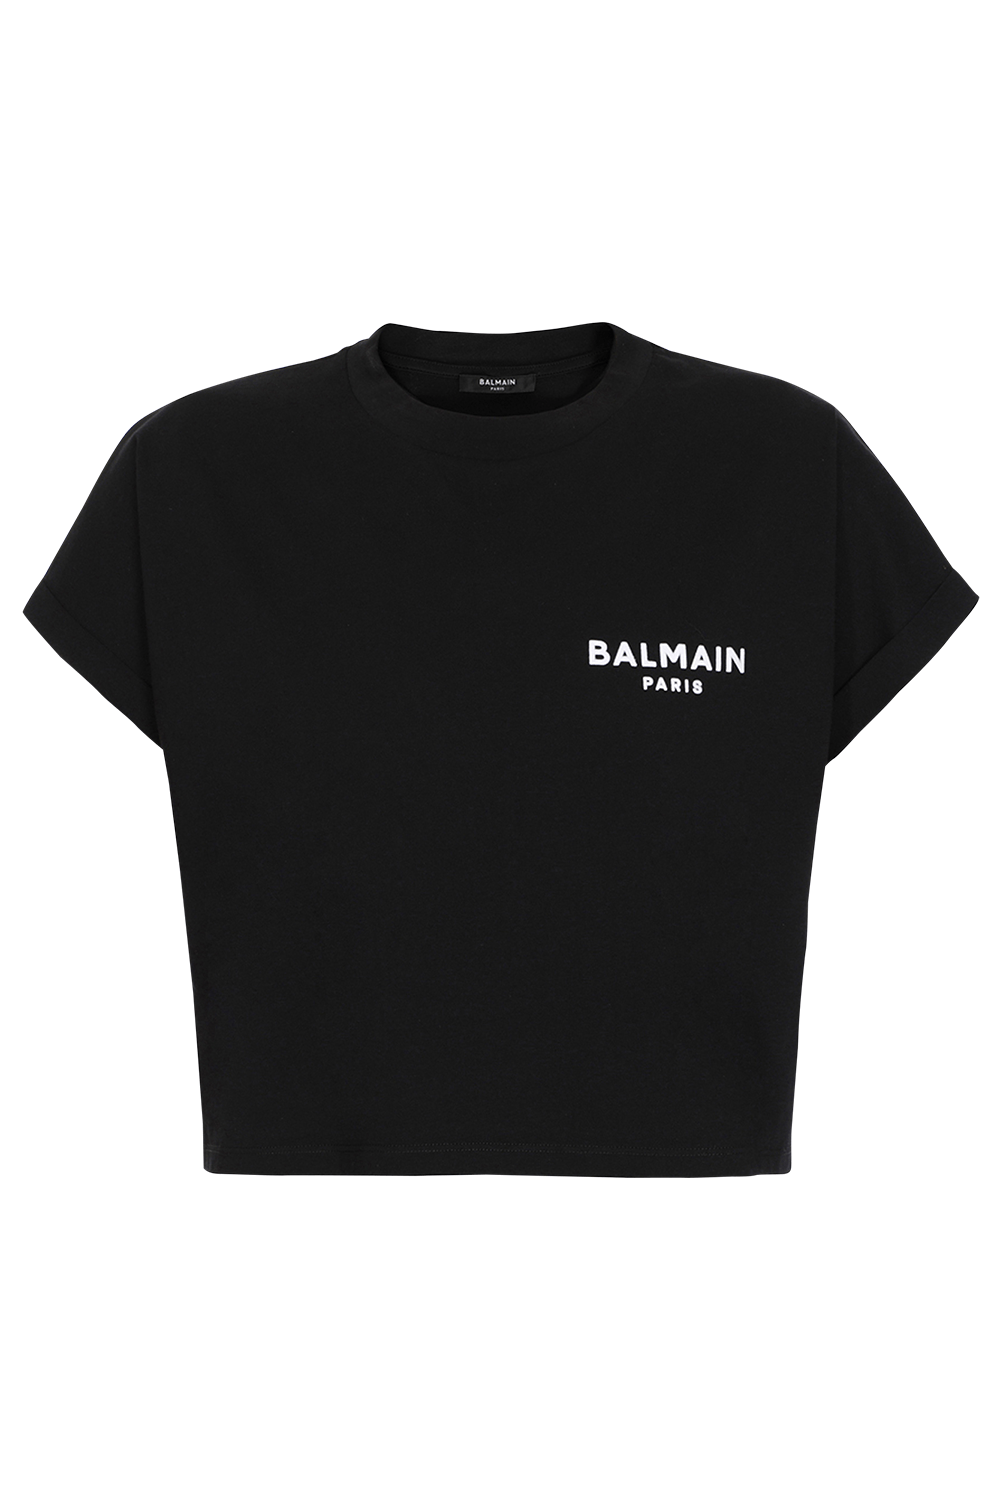 BALMAIN-Flocked Paris Cropped T-Shirt - Noir-